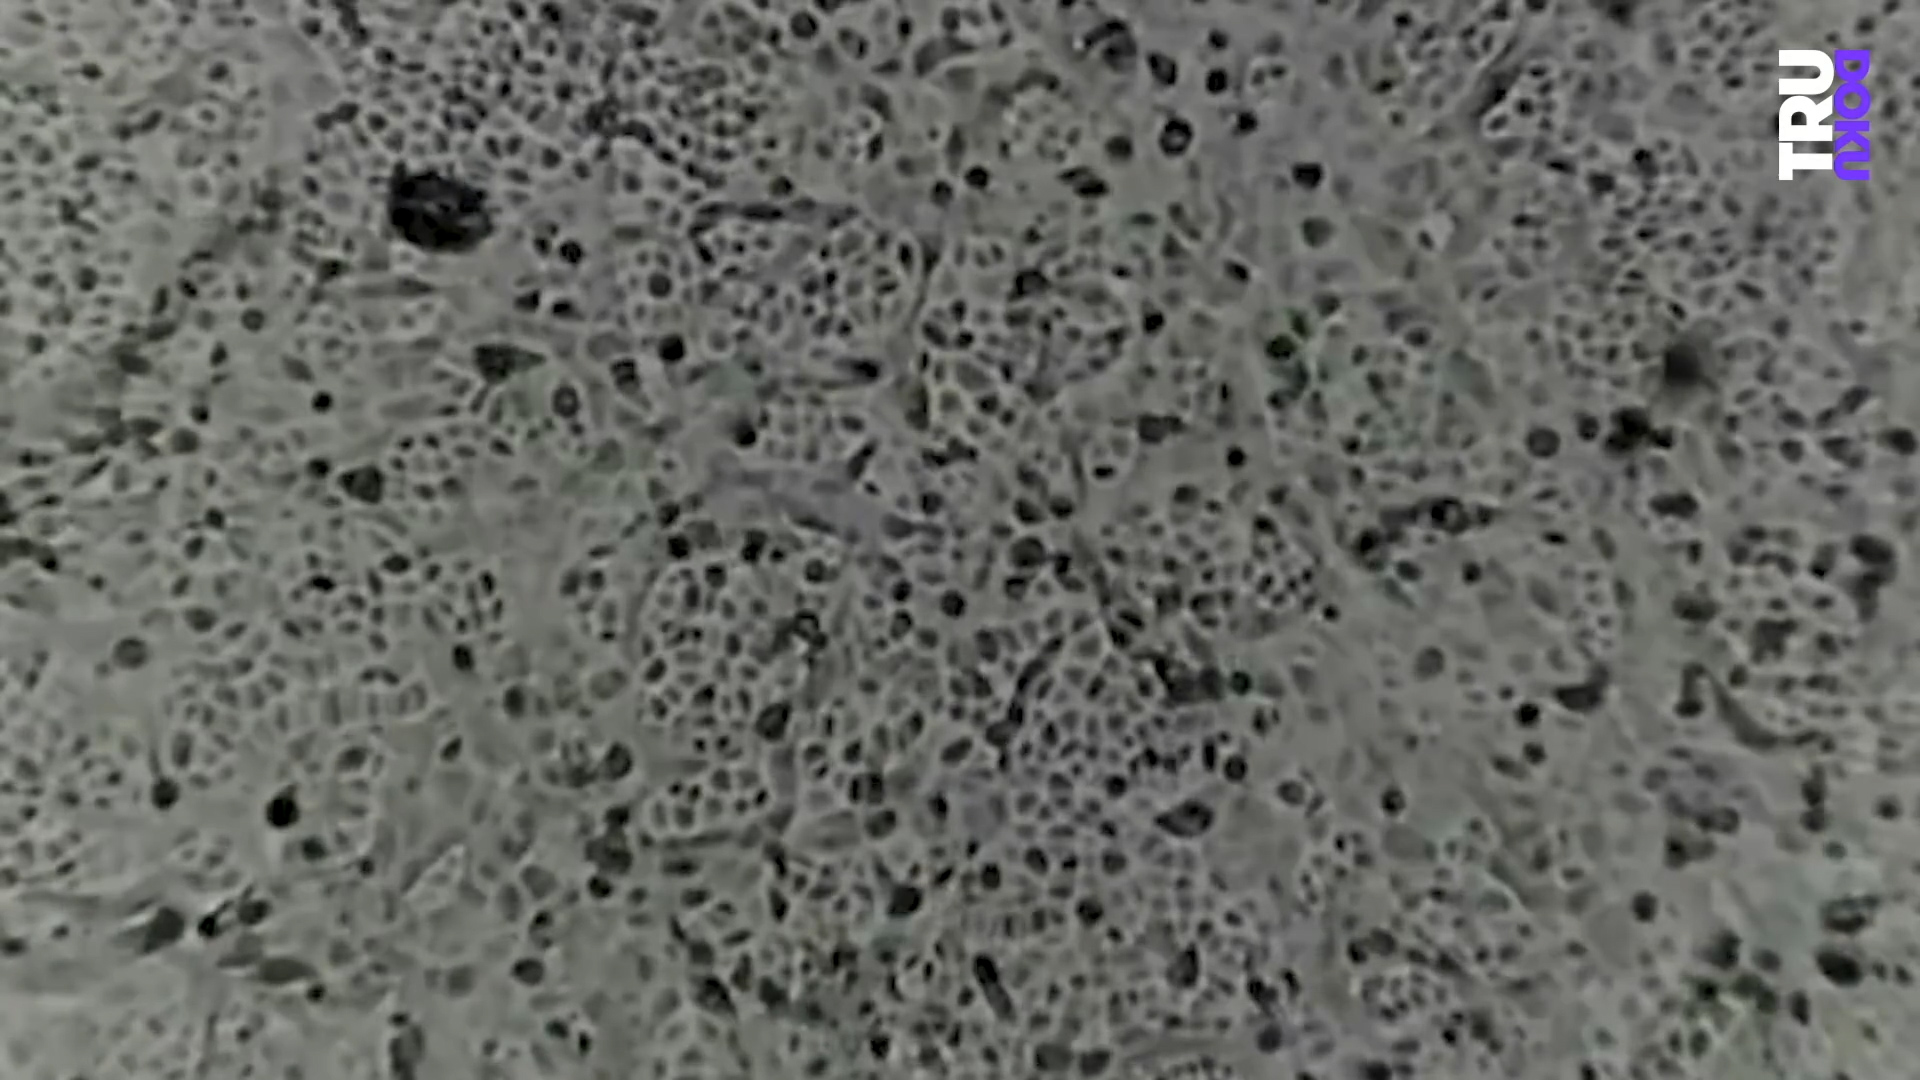 the coronavirus under a microscope